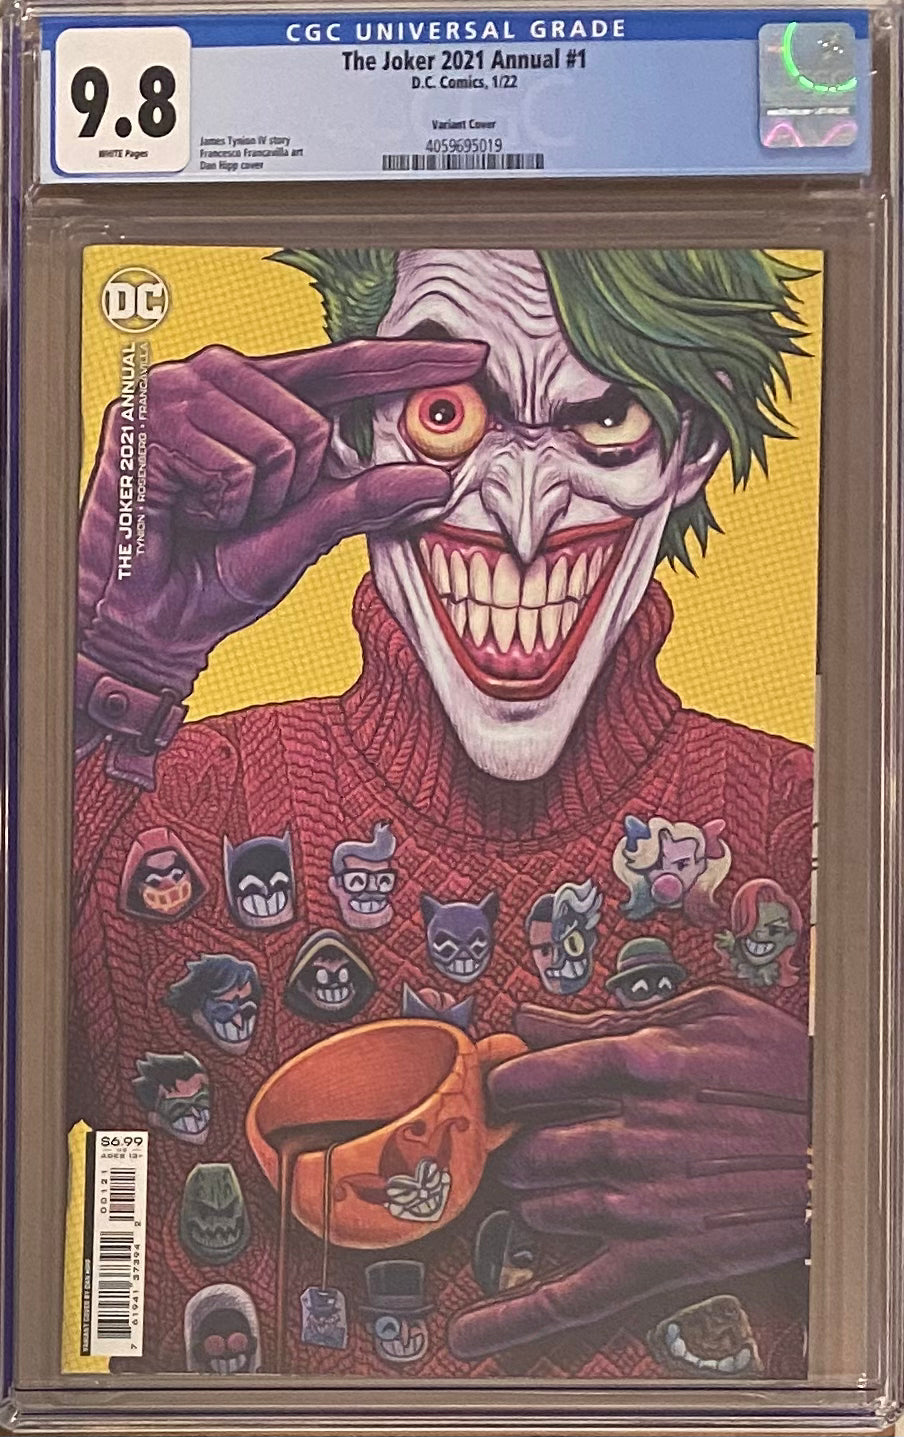 The Joker 2021 Annual #1 Variant CGC 9.8